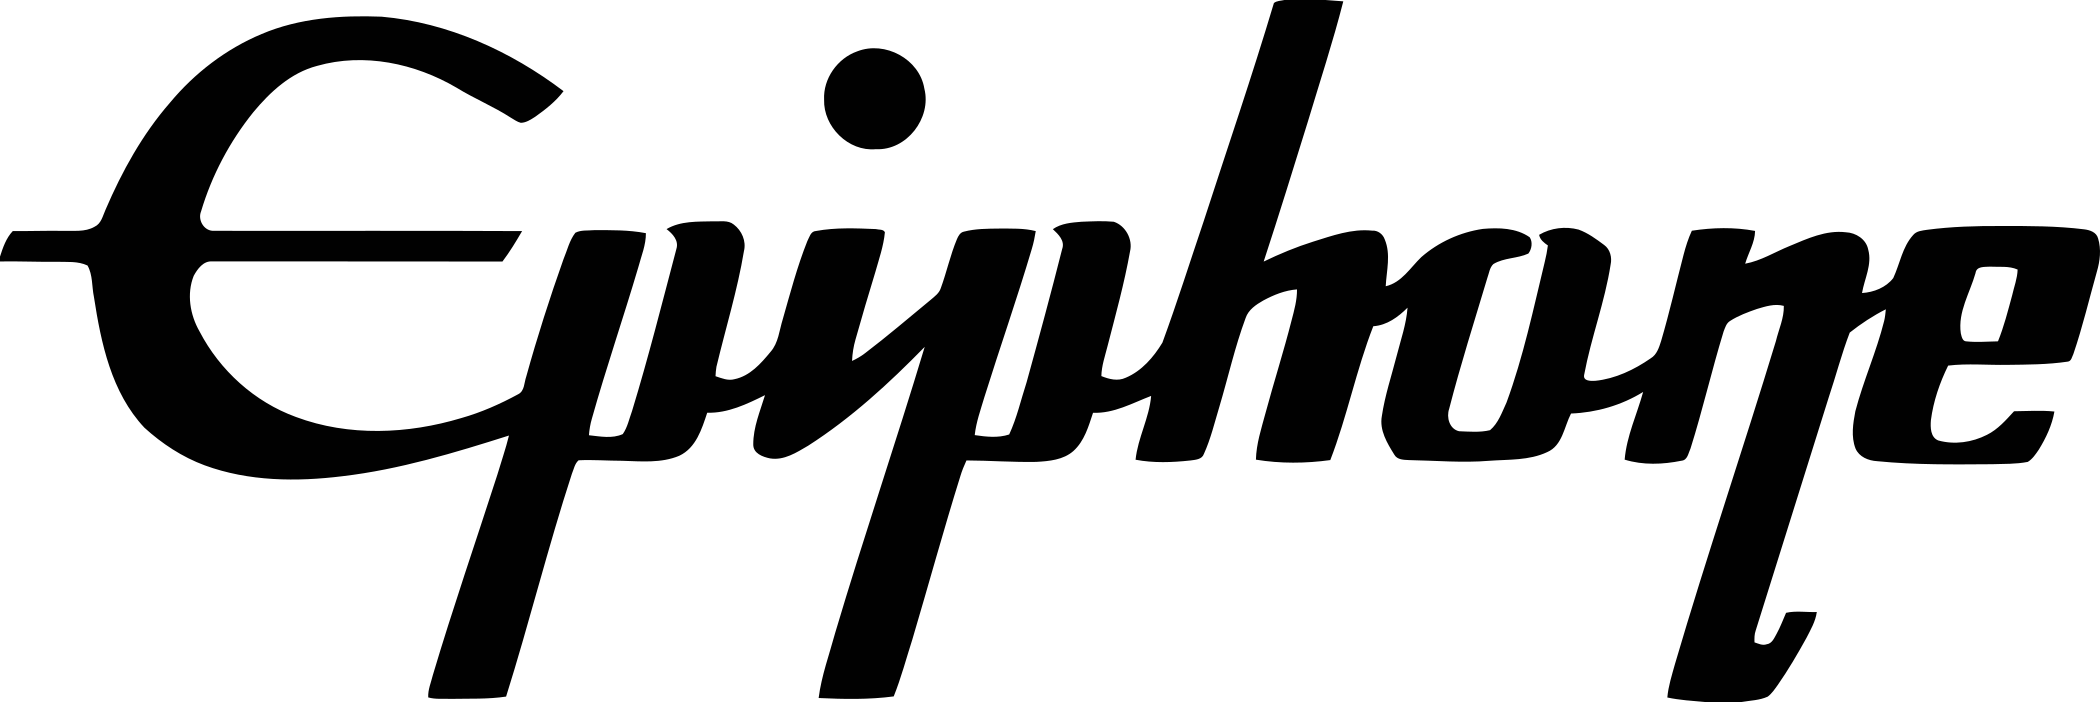 epiphone logo.